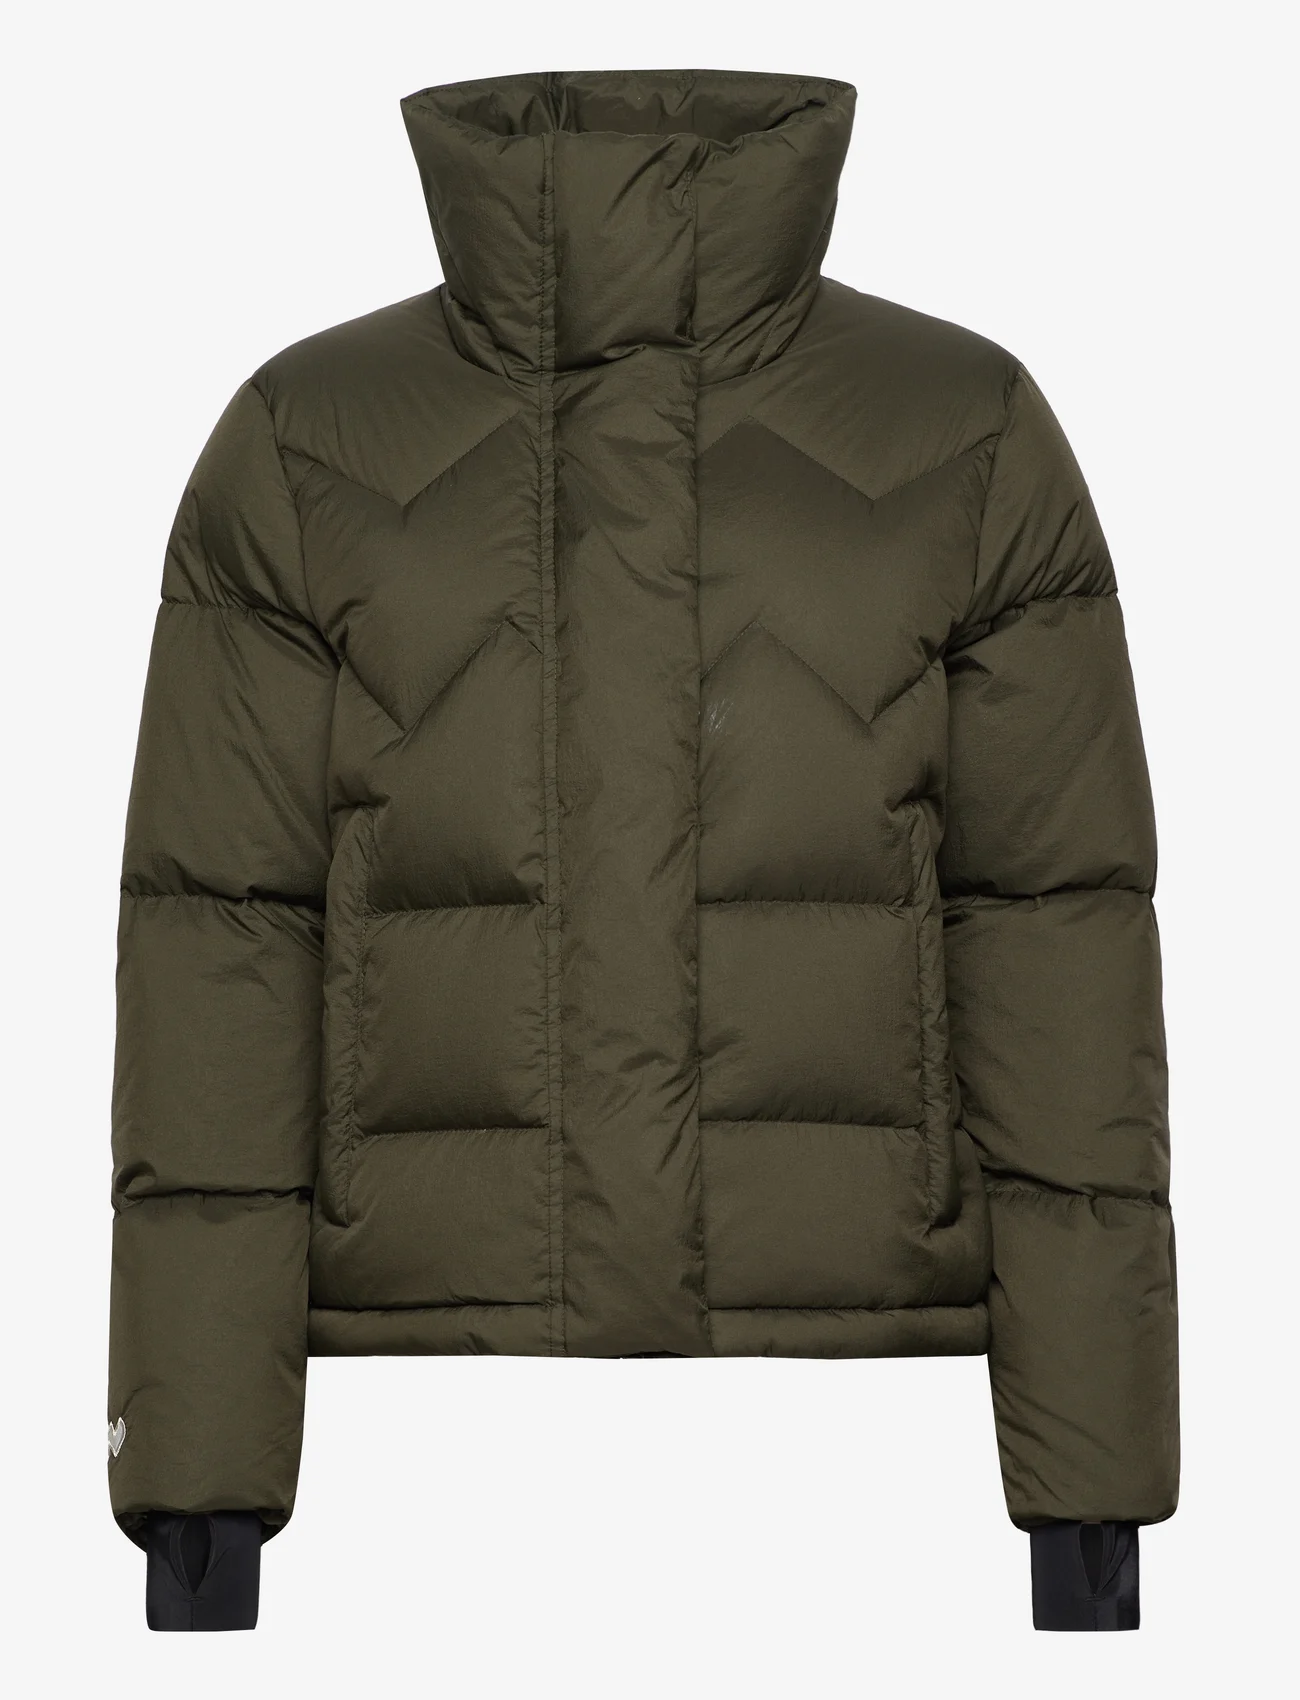 Mountain Works - WS EPITOME DOWN PARKA - winter jacket - military - 0